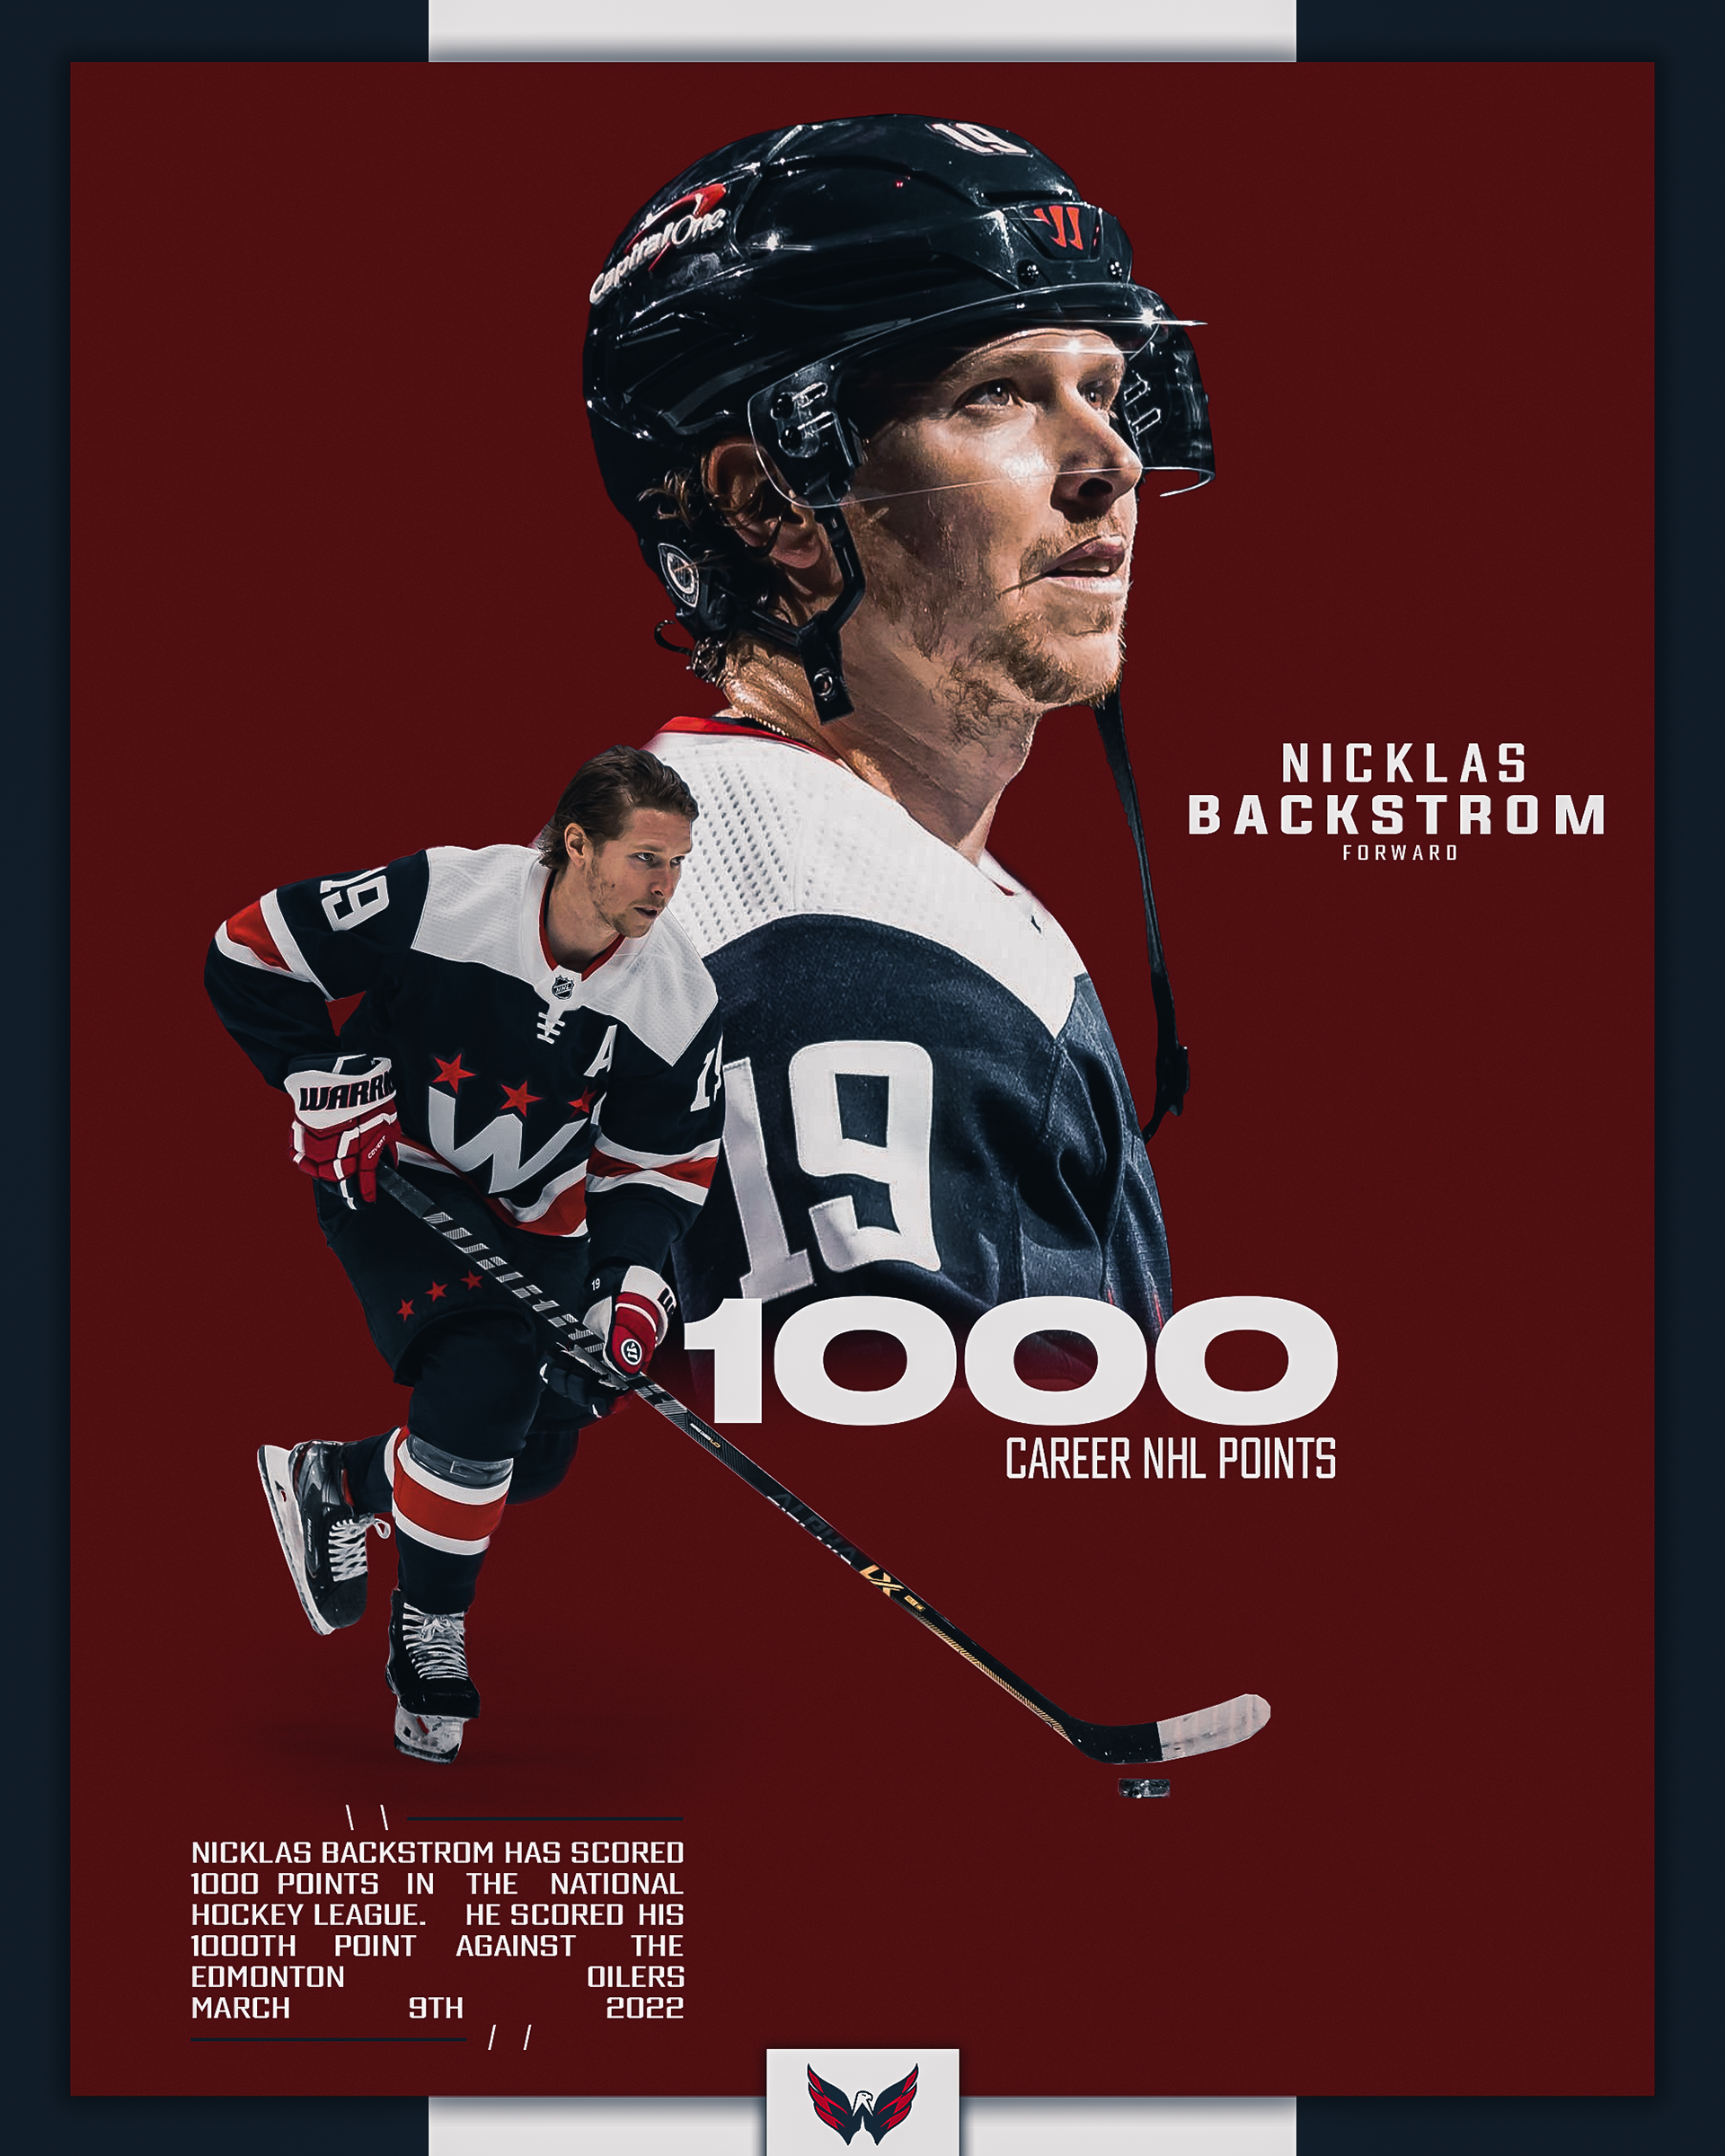 Timo Meier 28  Hockey players, Ice hockey, Hero poster